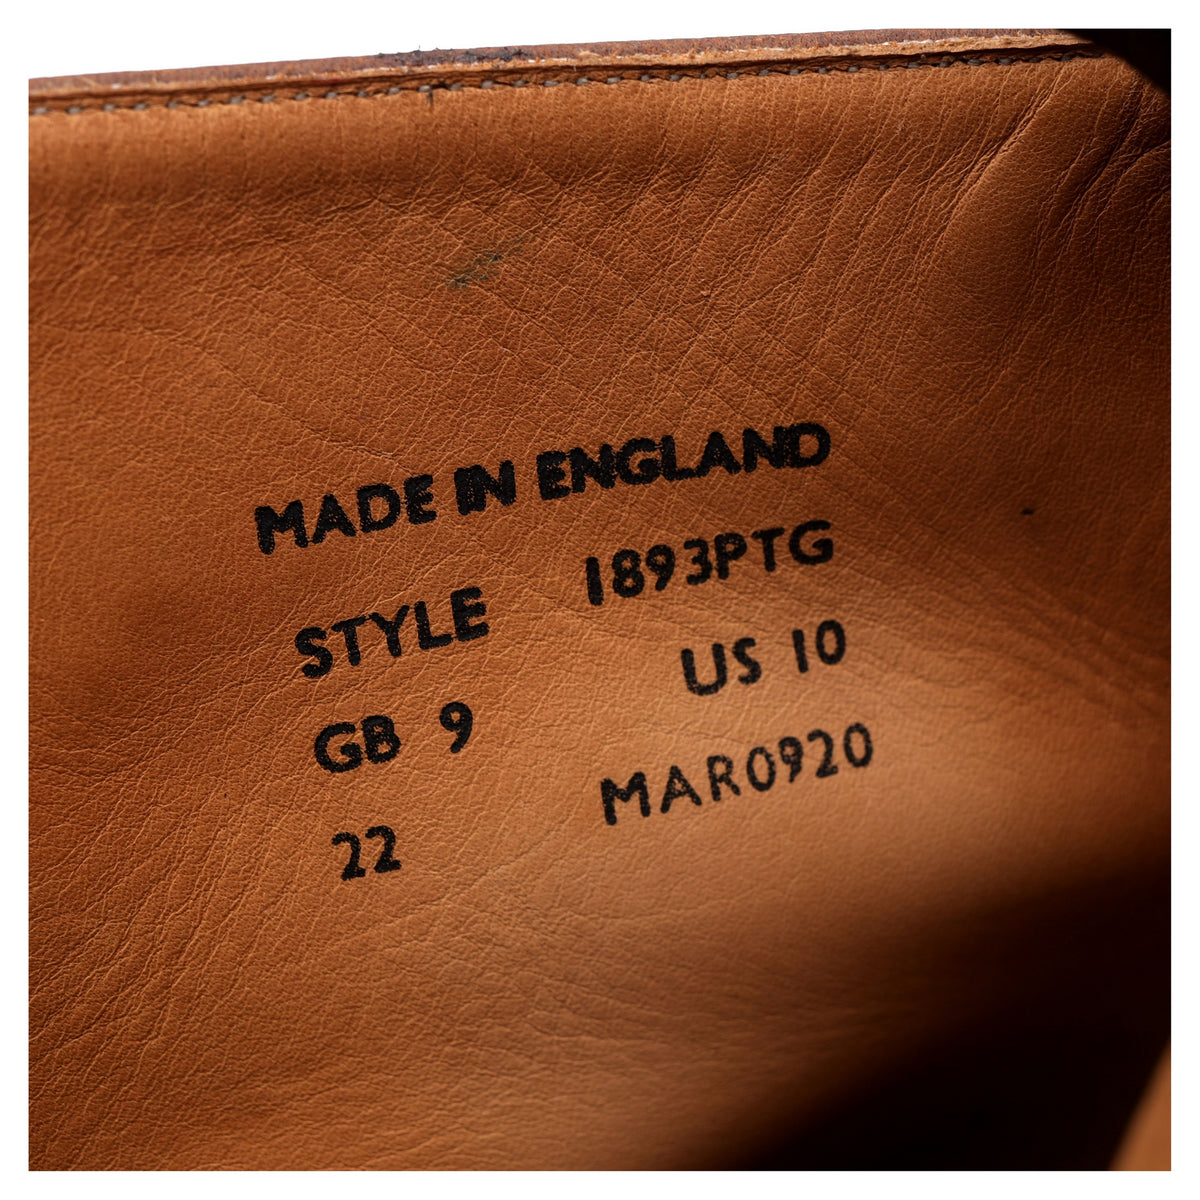 Next Dark Brown Leather Boots UK 9 F